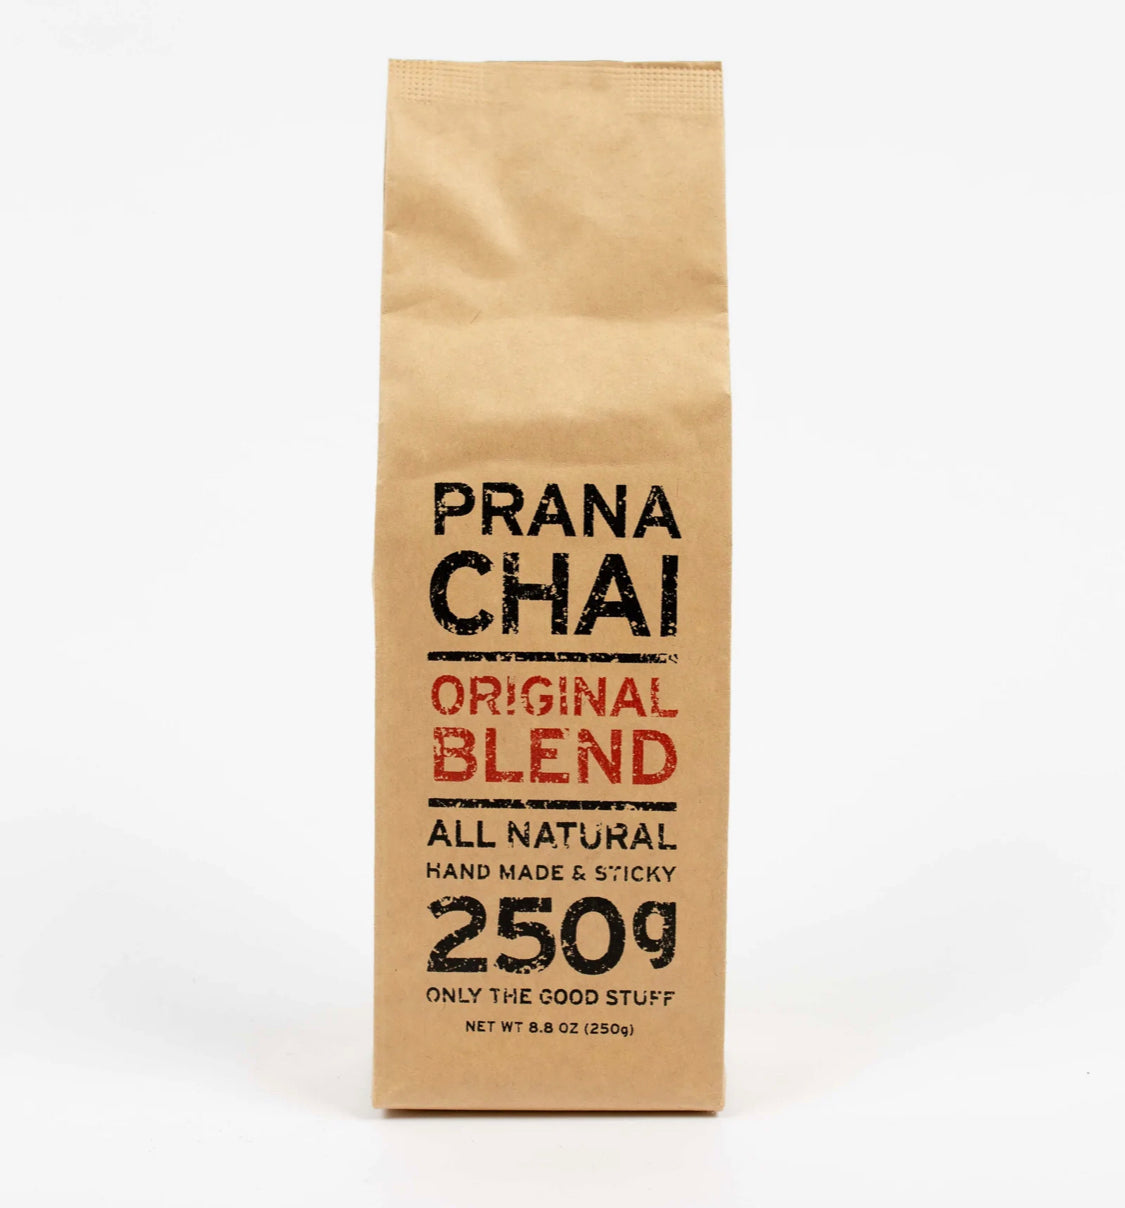 Prana Chai Original Blend (250g)